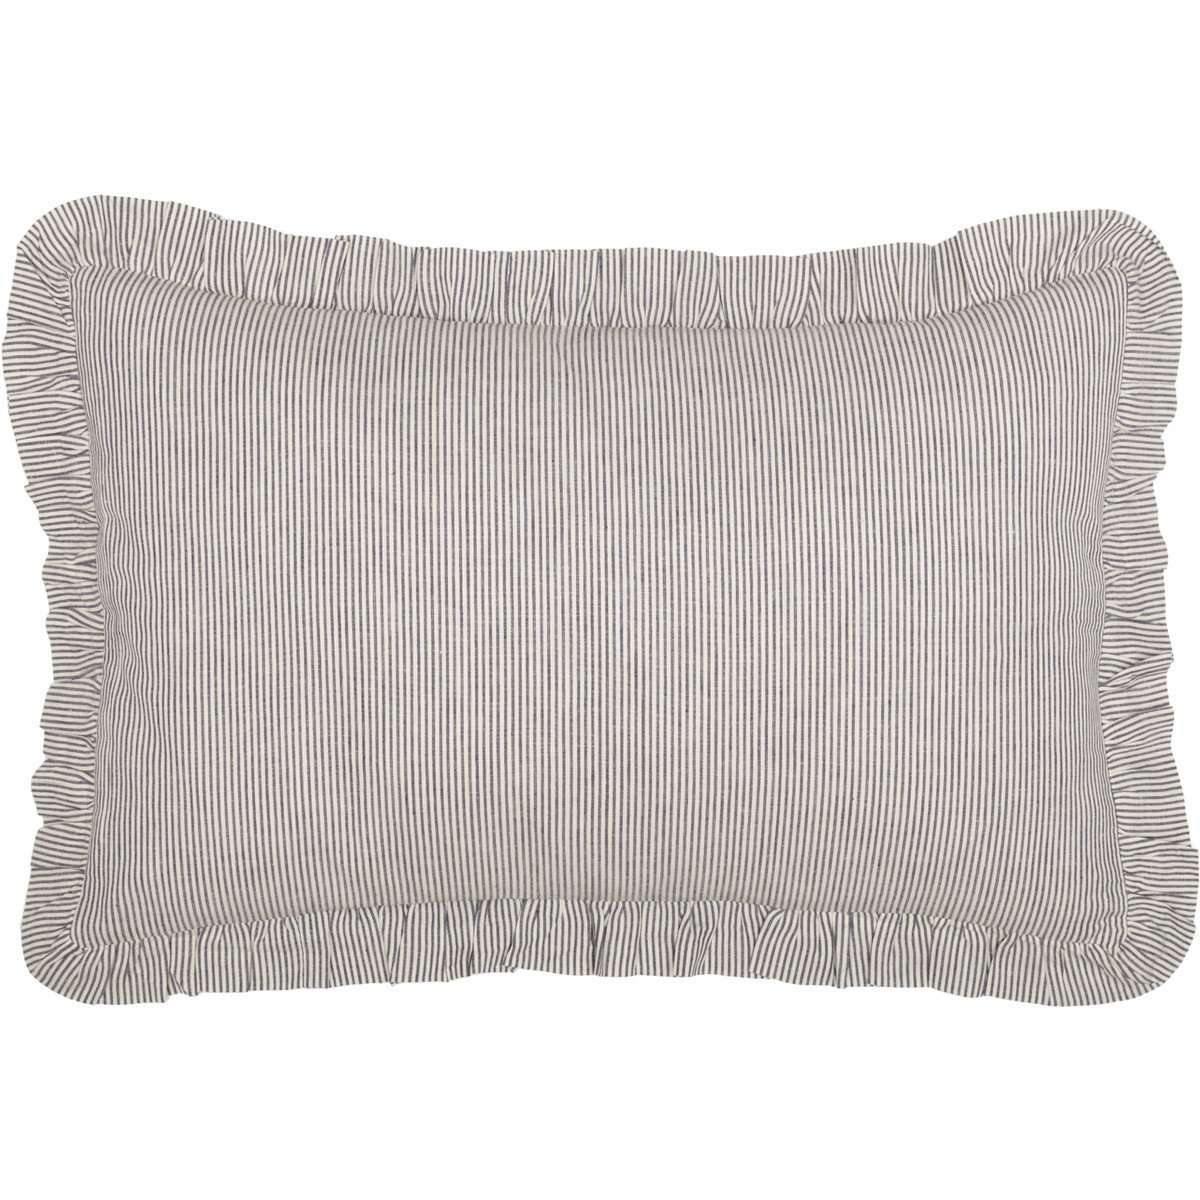 Dakota Star Farmhouse Blue Ticking Stripe Fabric Pillow 14x22 VHC Brands